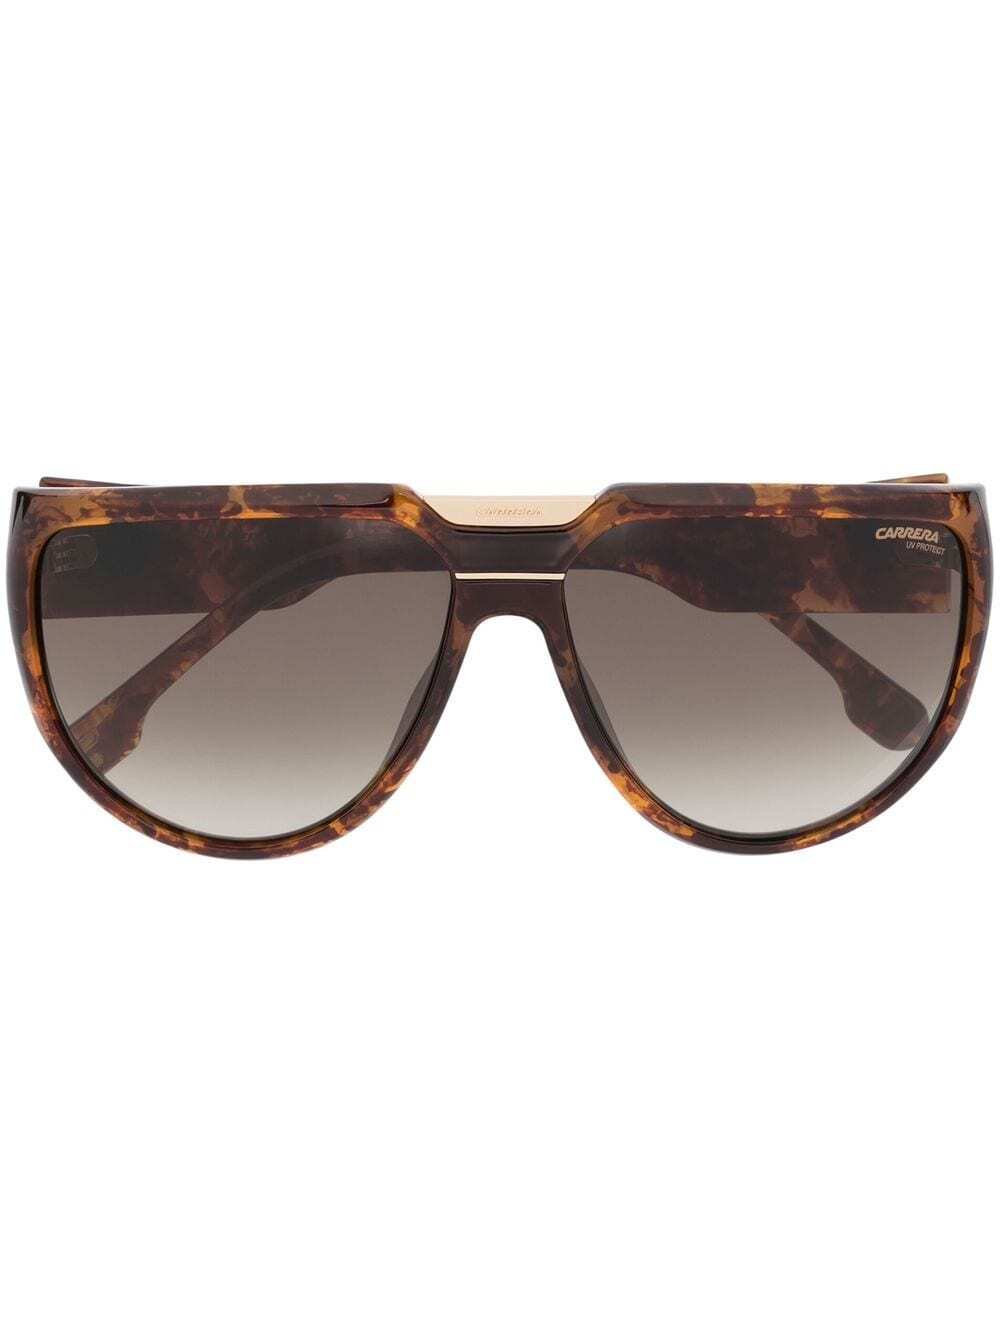 Carrera Flaglab 13 oversized sunglasses - Brown